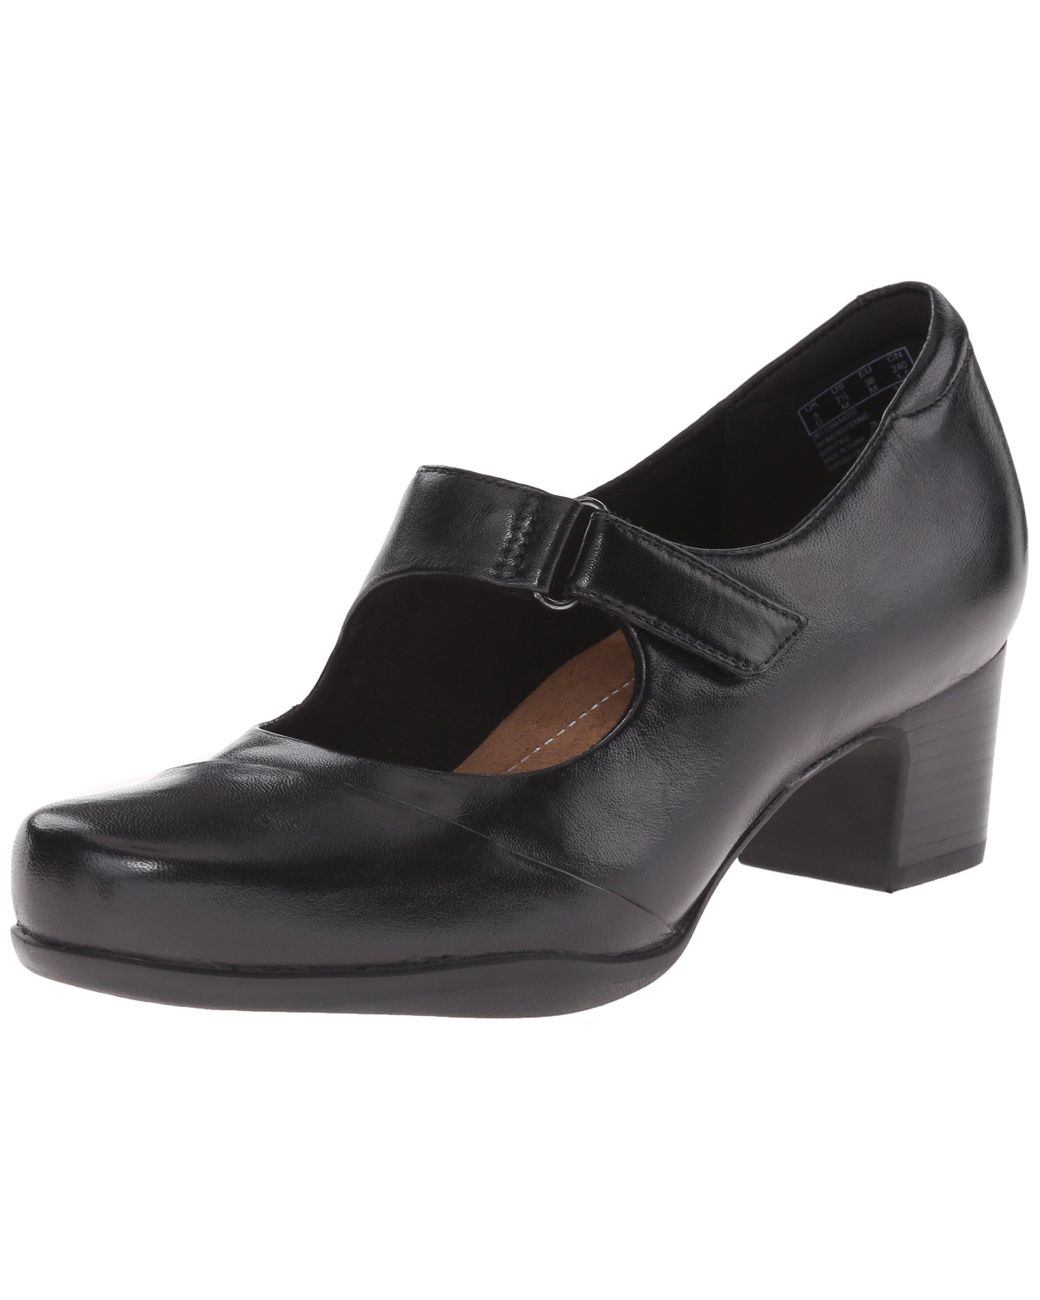 Clarks Leather Rosalyn Wren in Black Leather (Black) - Save 32% | Lyst